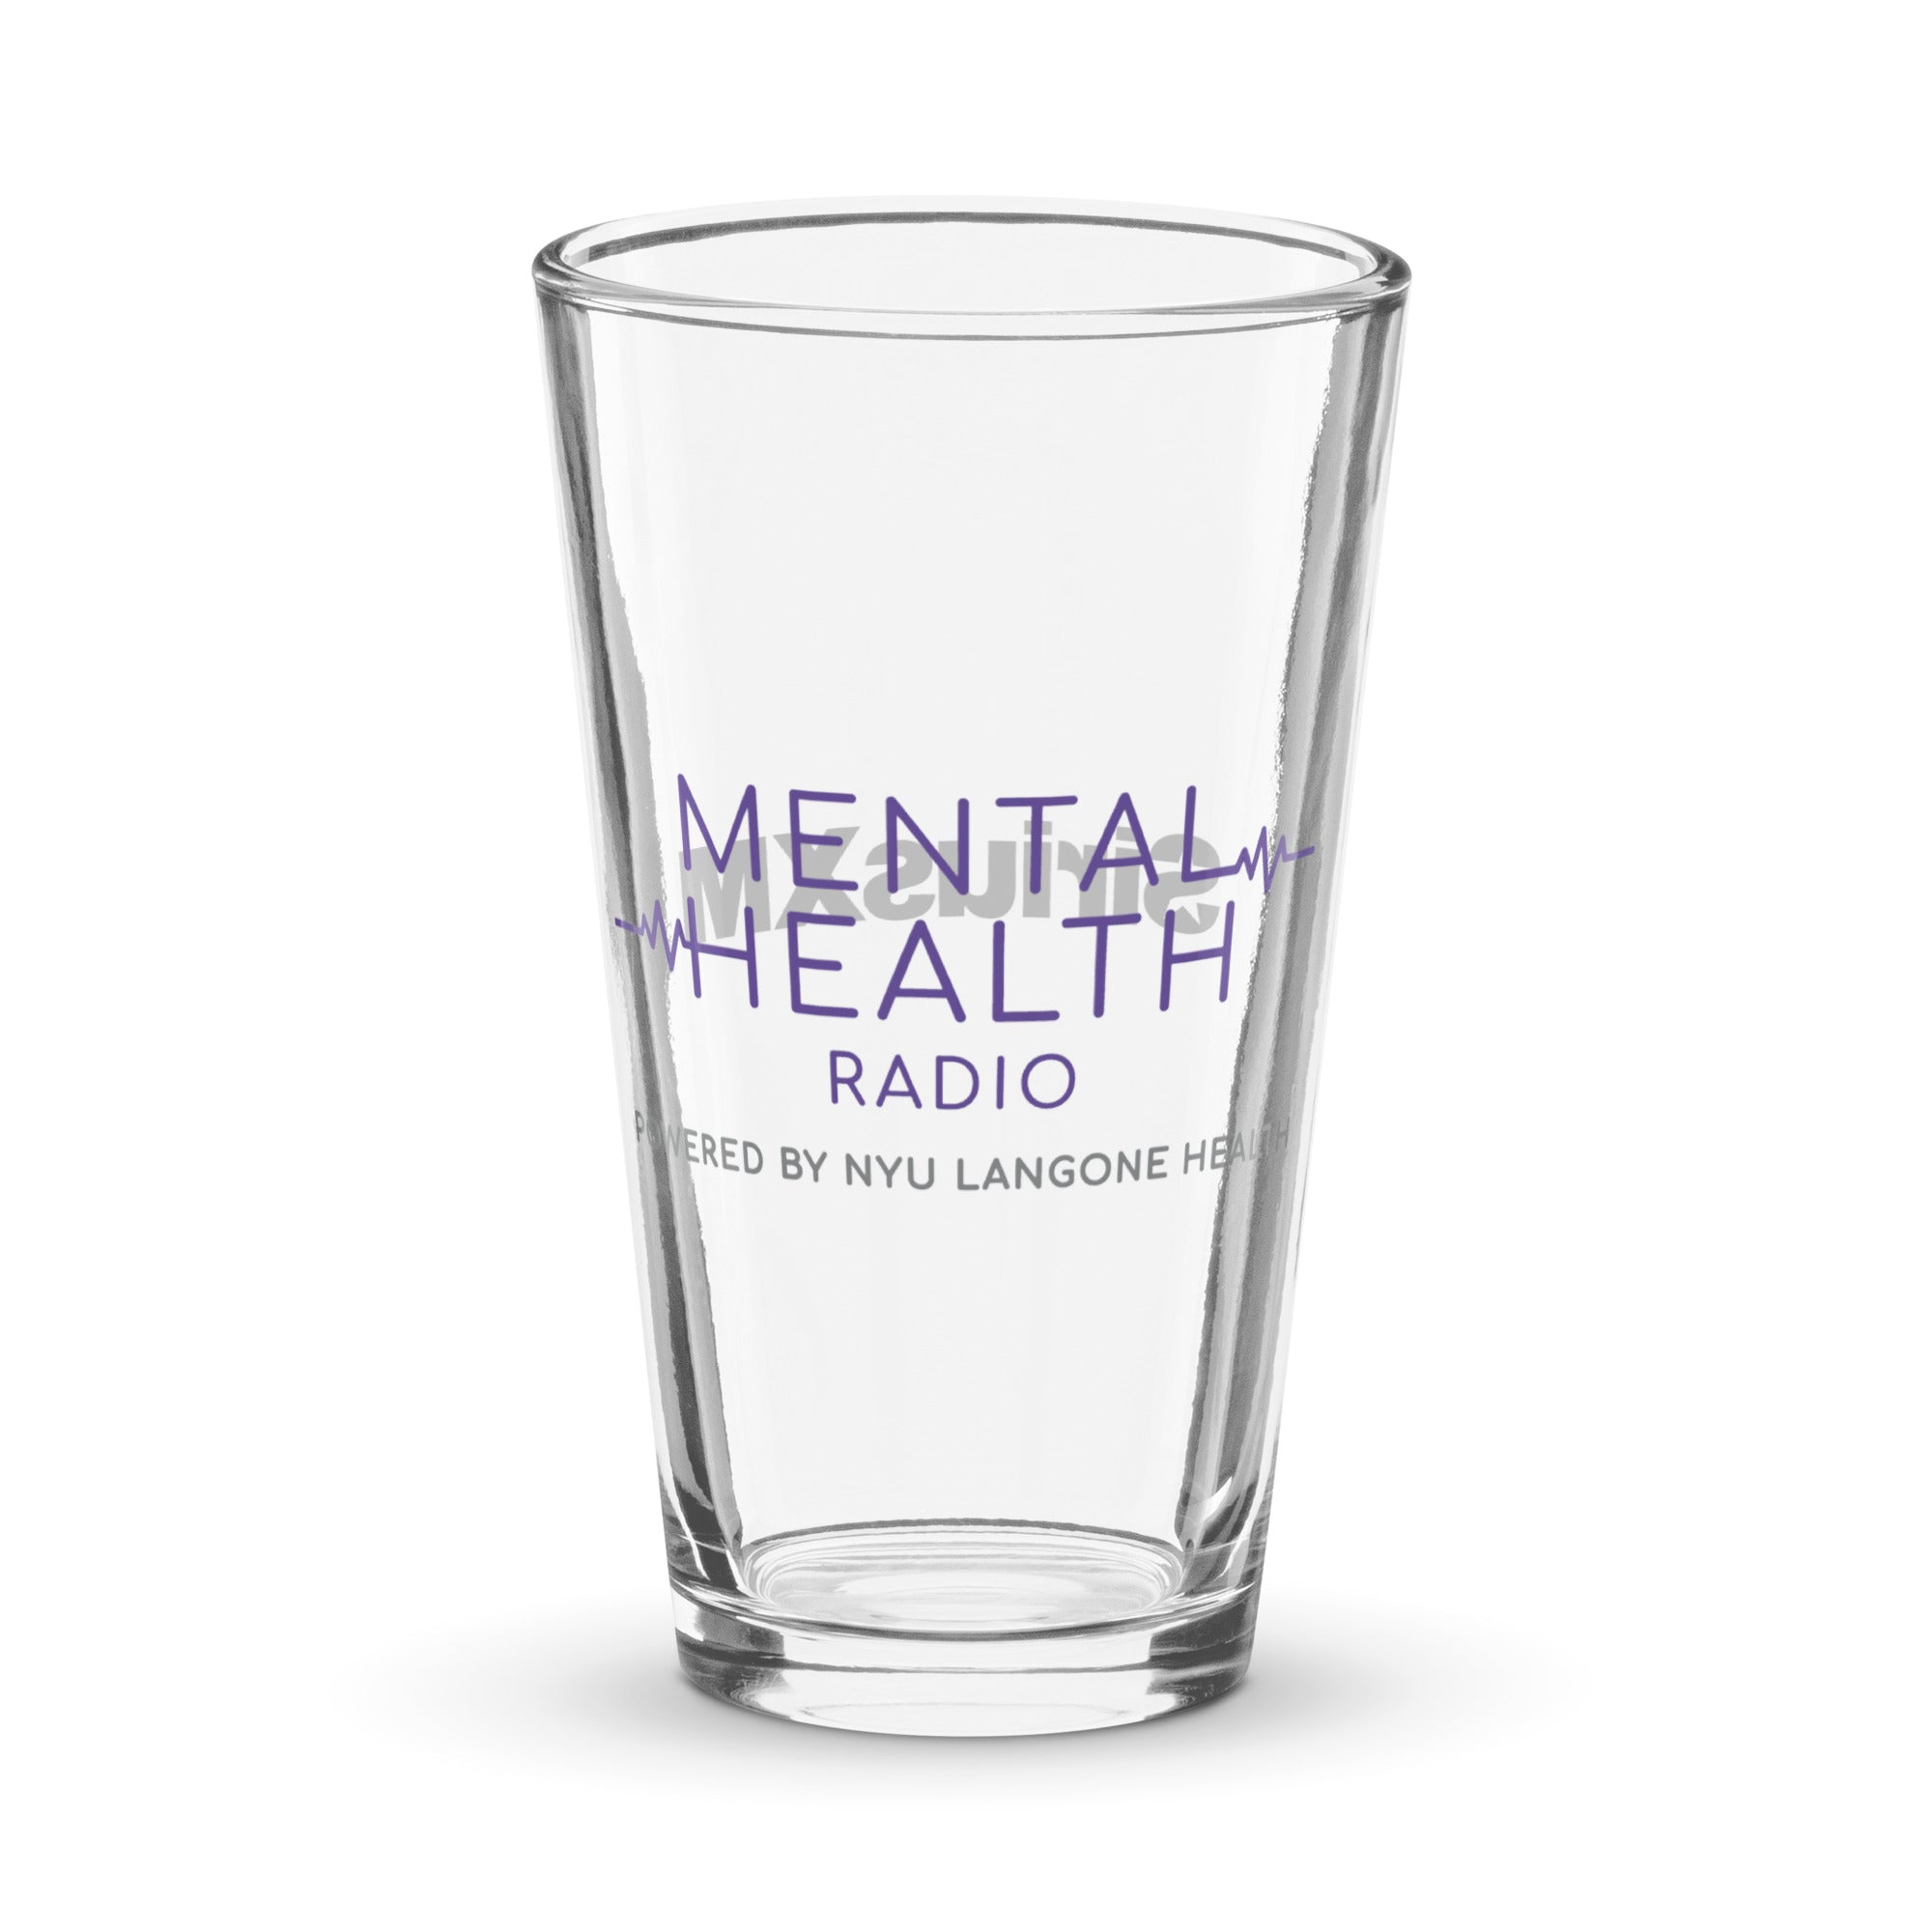 Mental Health Radio: Pint Glass